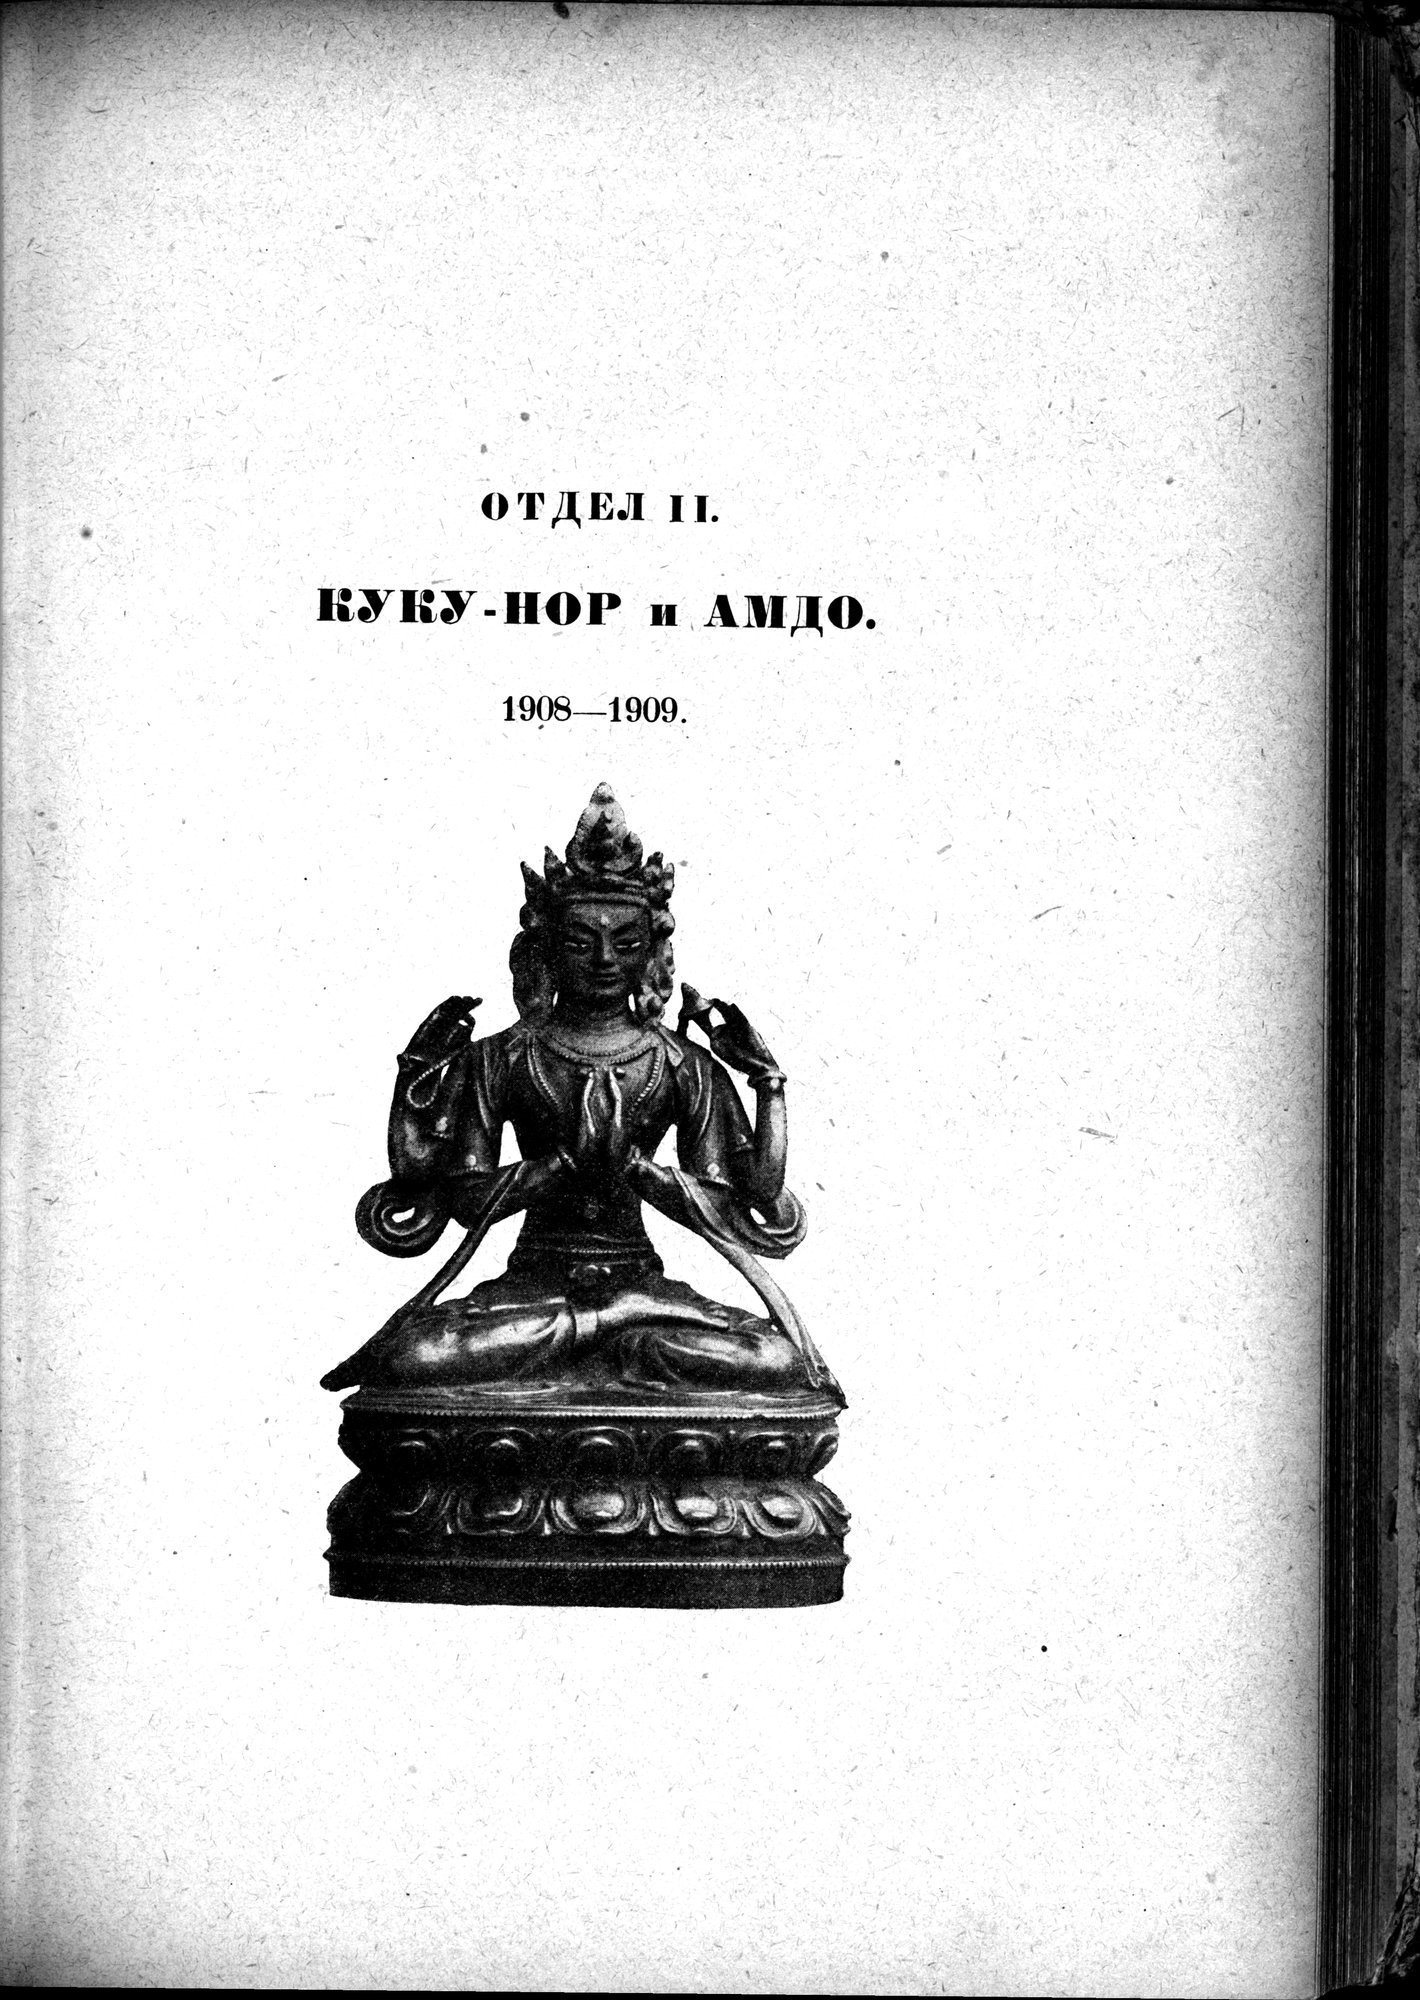 Mongoliya i Amdo i mertby gorod Khara-Khoto : vol.1 / Page 269 (Grayscale High Resolution Image)